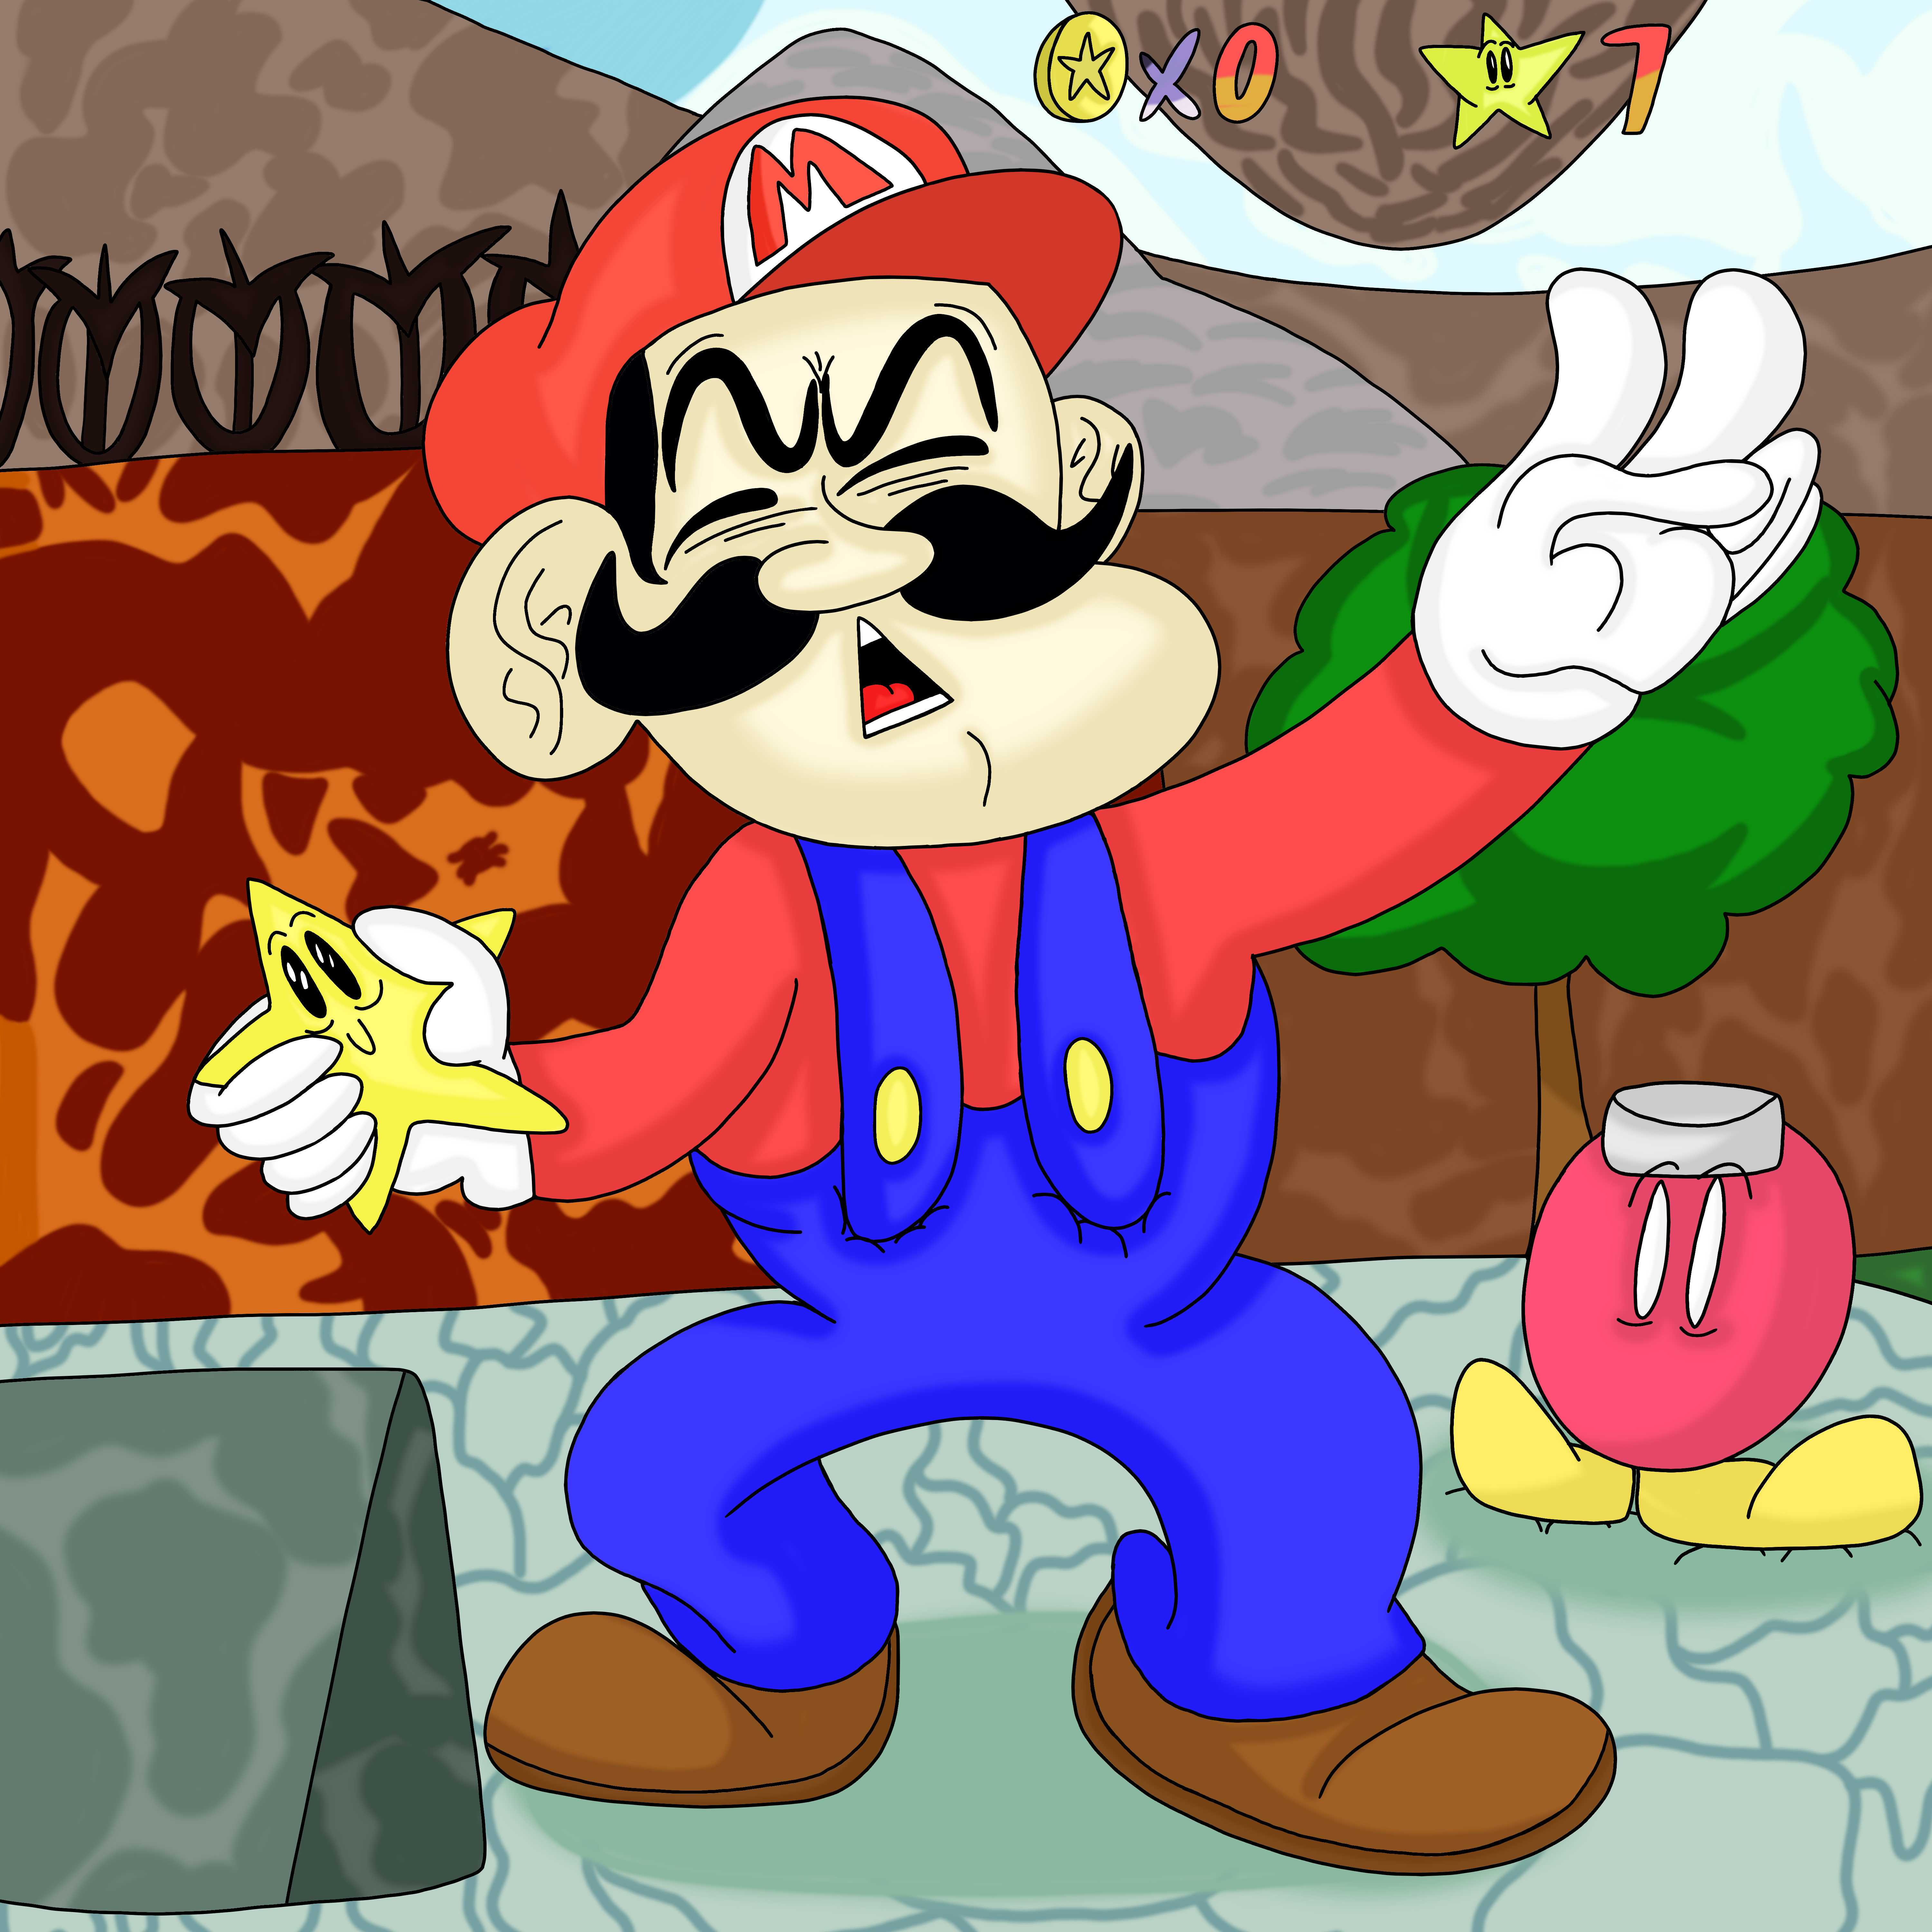 Super Mario 64 by TanookiDX on DeviantArt